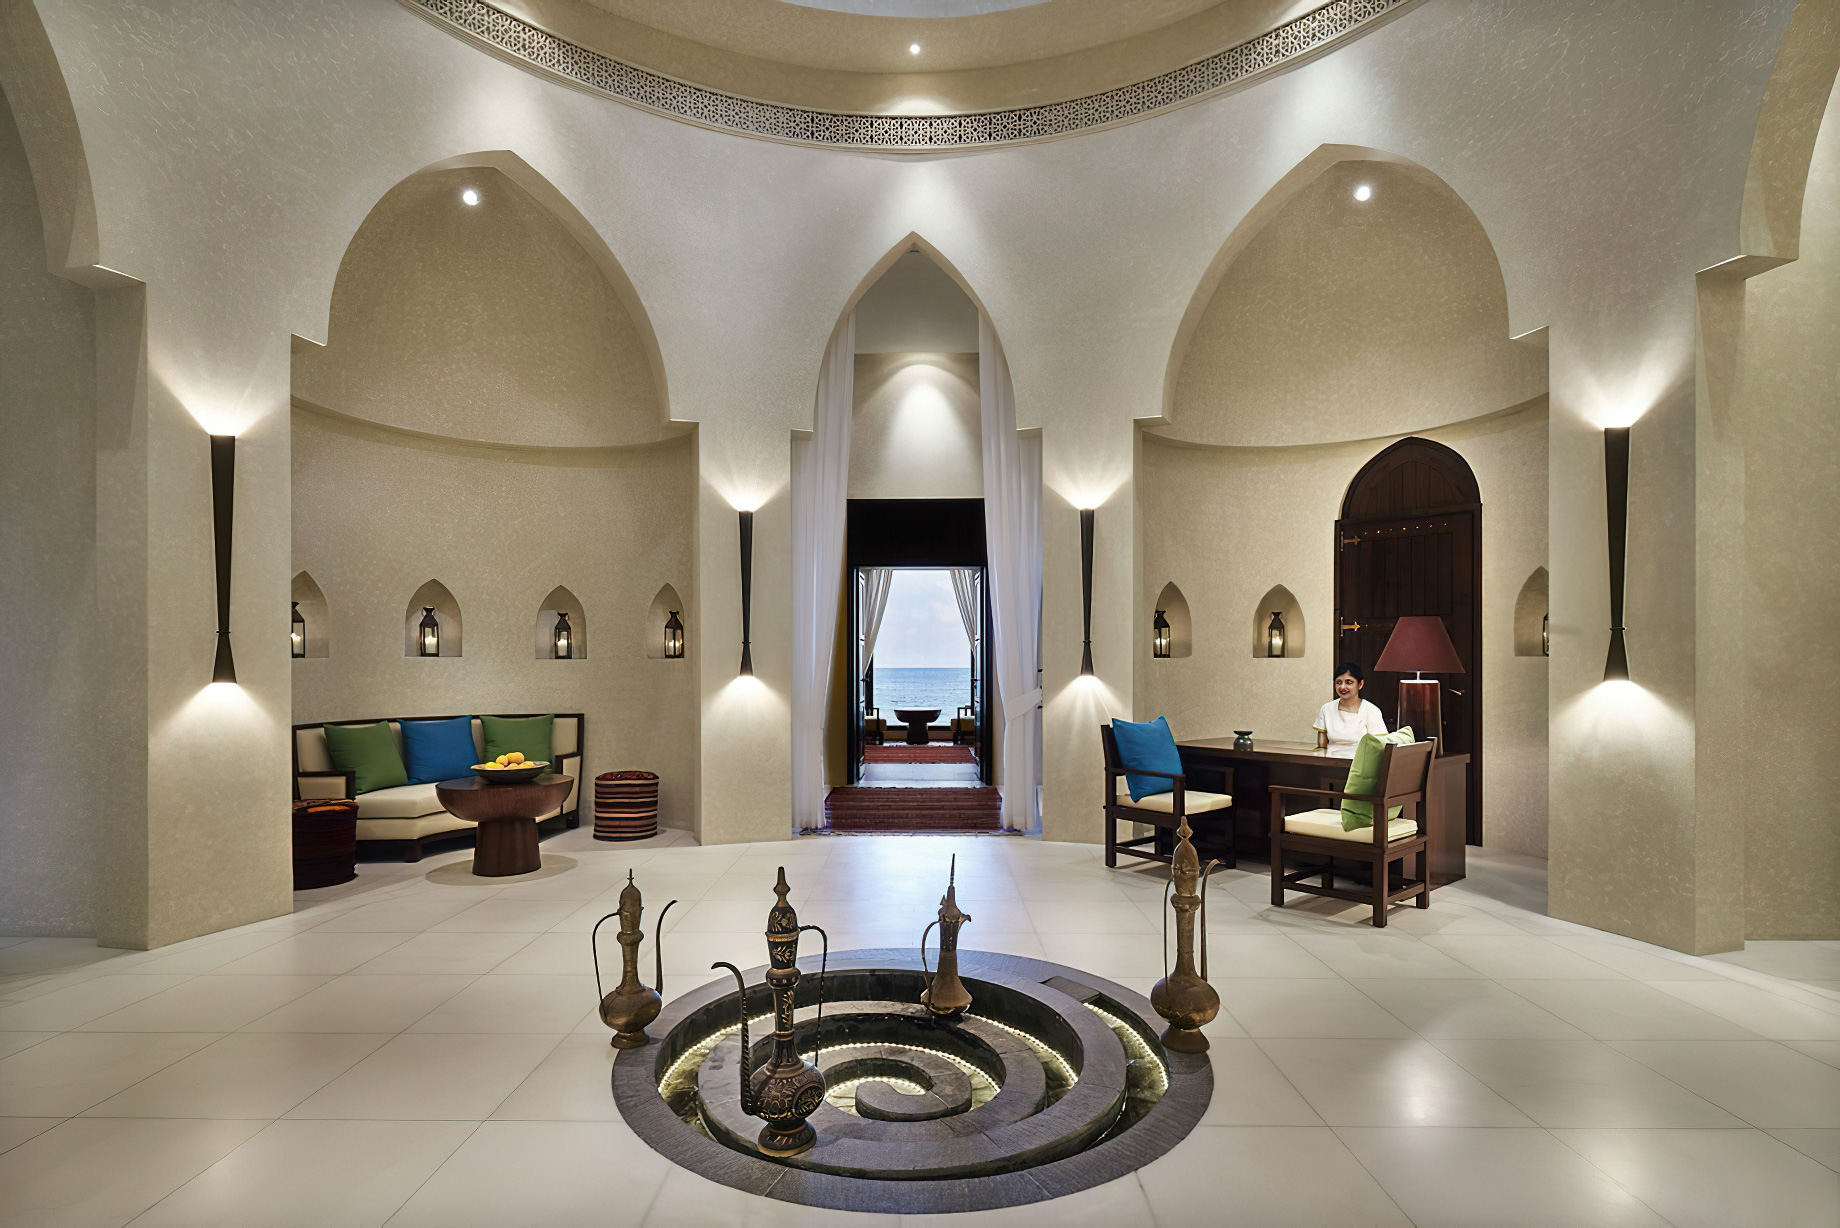 Al Bustan Palace, A Ritz-Carlton Hotel - Muscat, Oman - Spa Reception